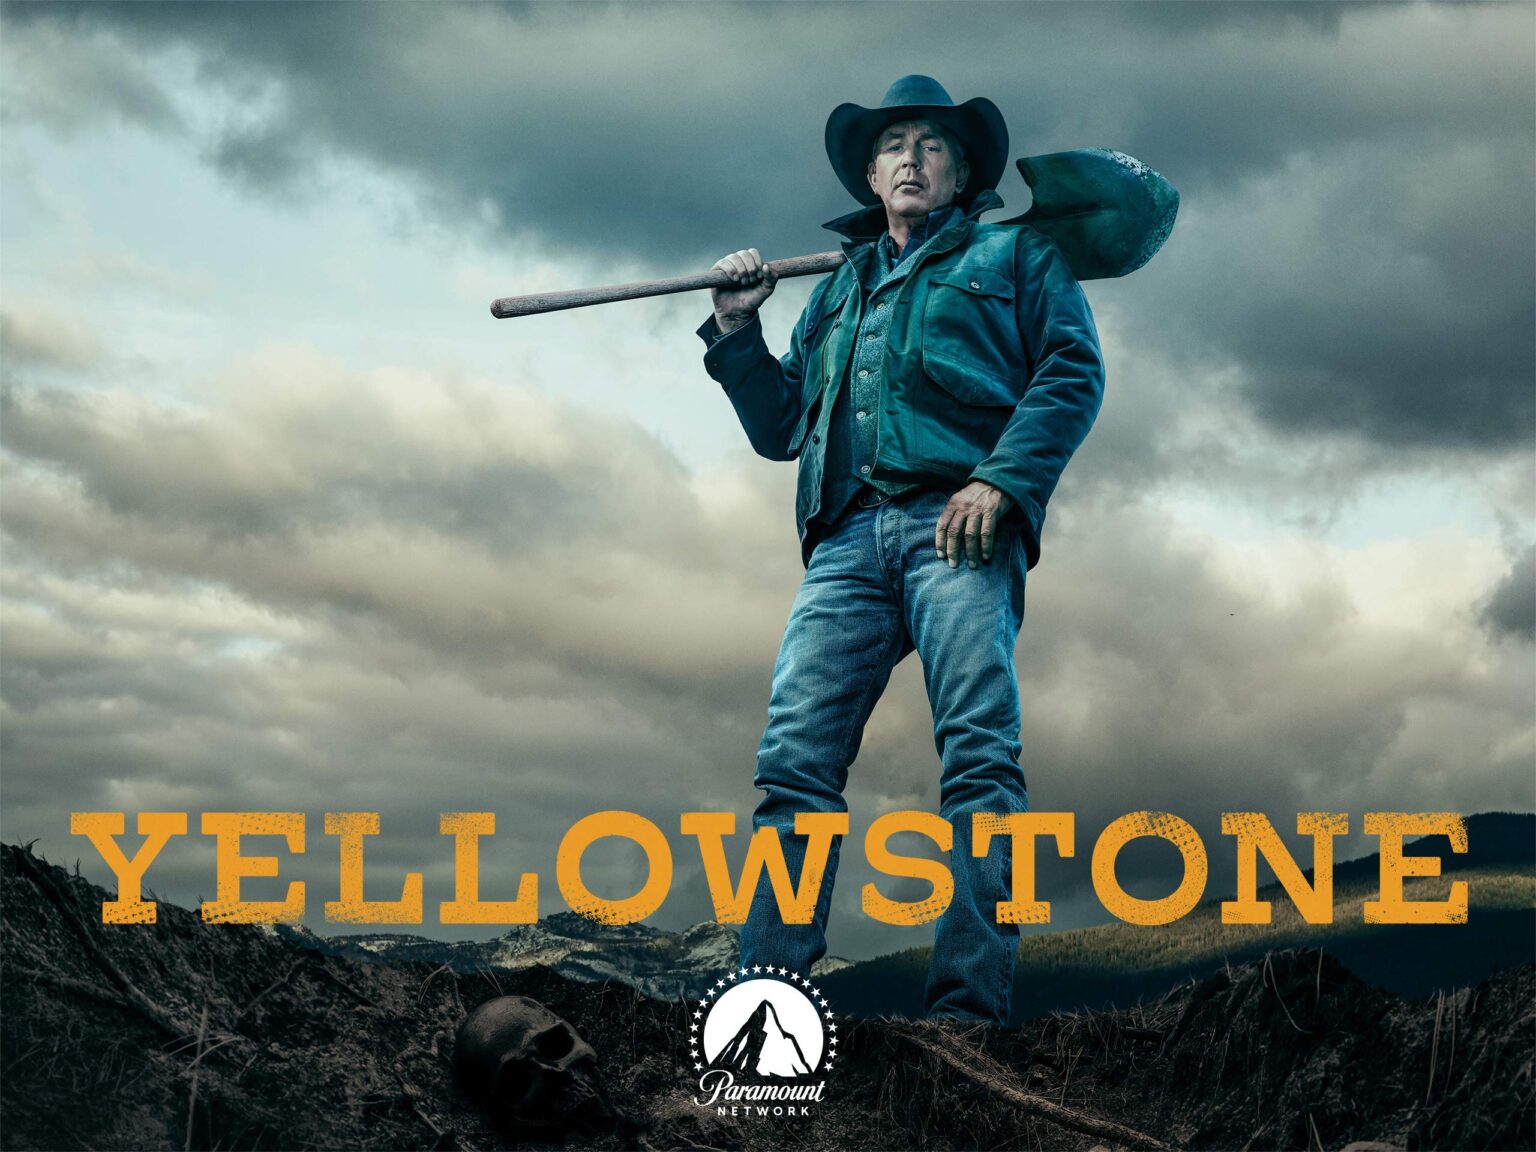 Yellowstone Season 5 Release Date When will get Season 5?